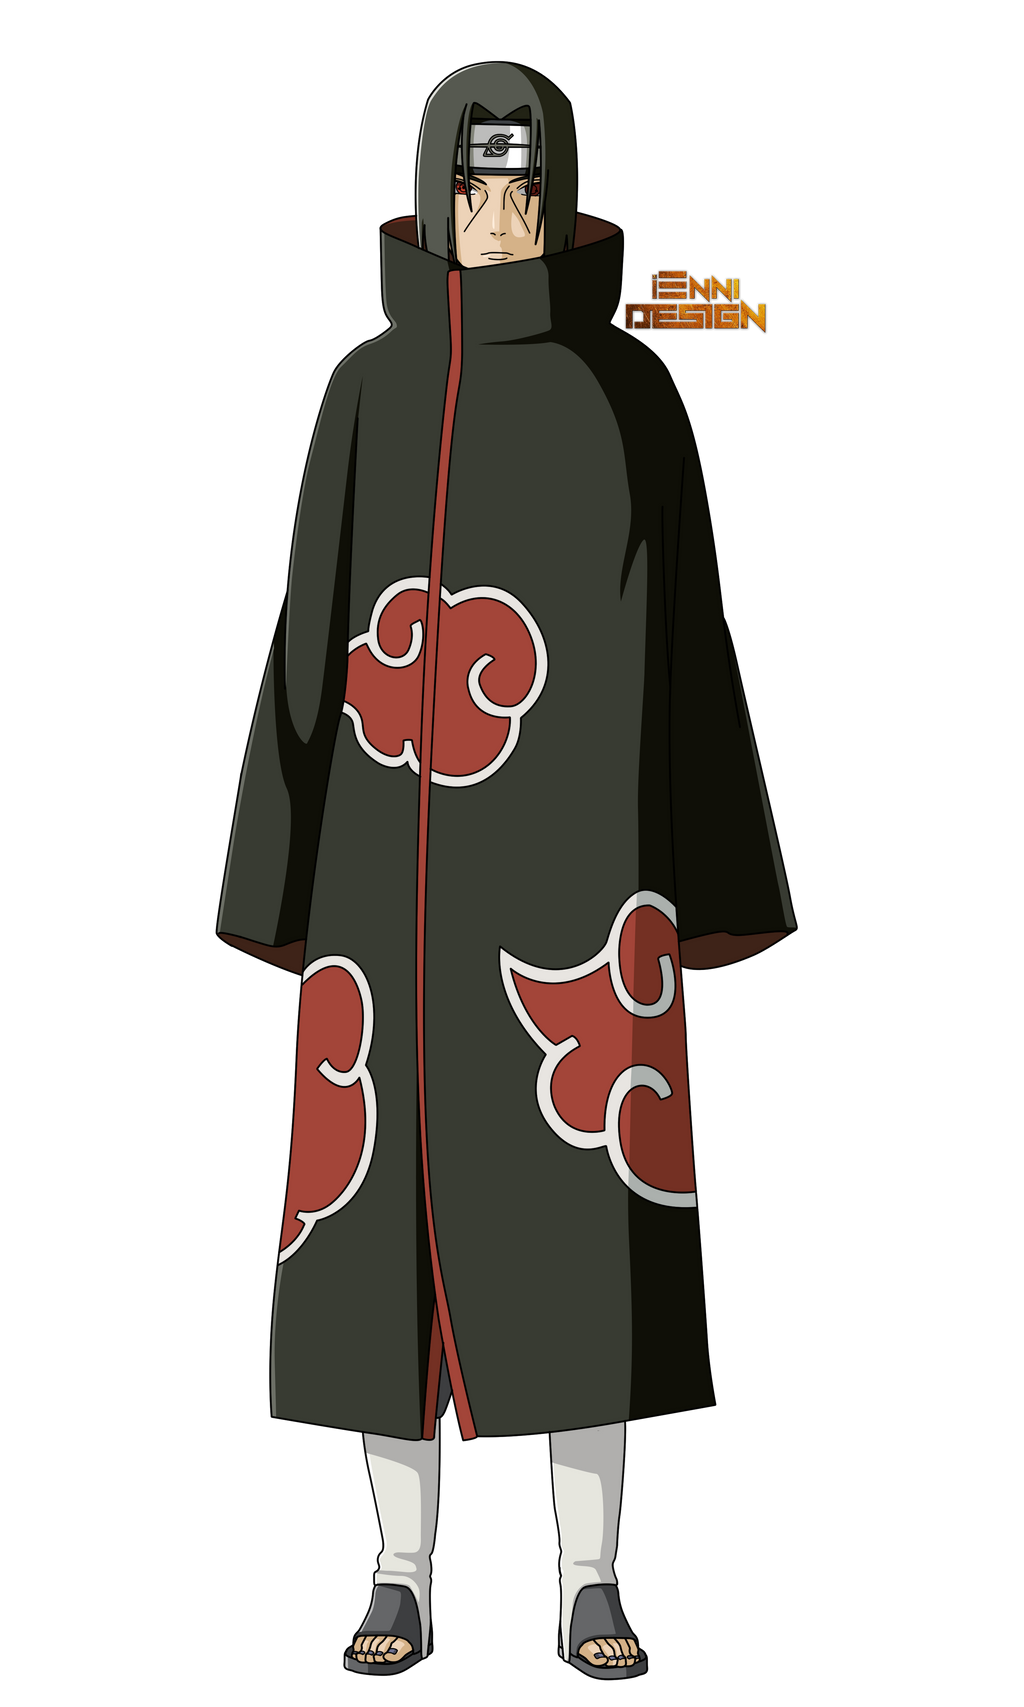 Naruto Shippudenitachi Uchiha By Iennidesign On Deviantart